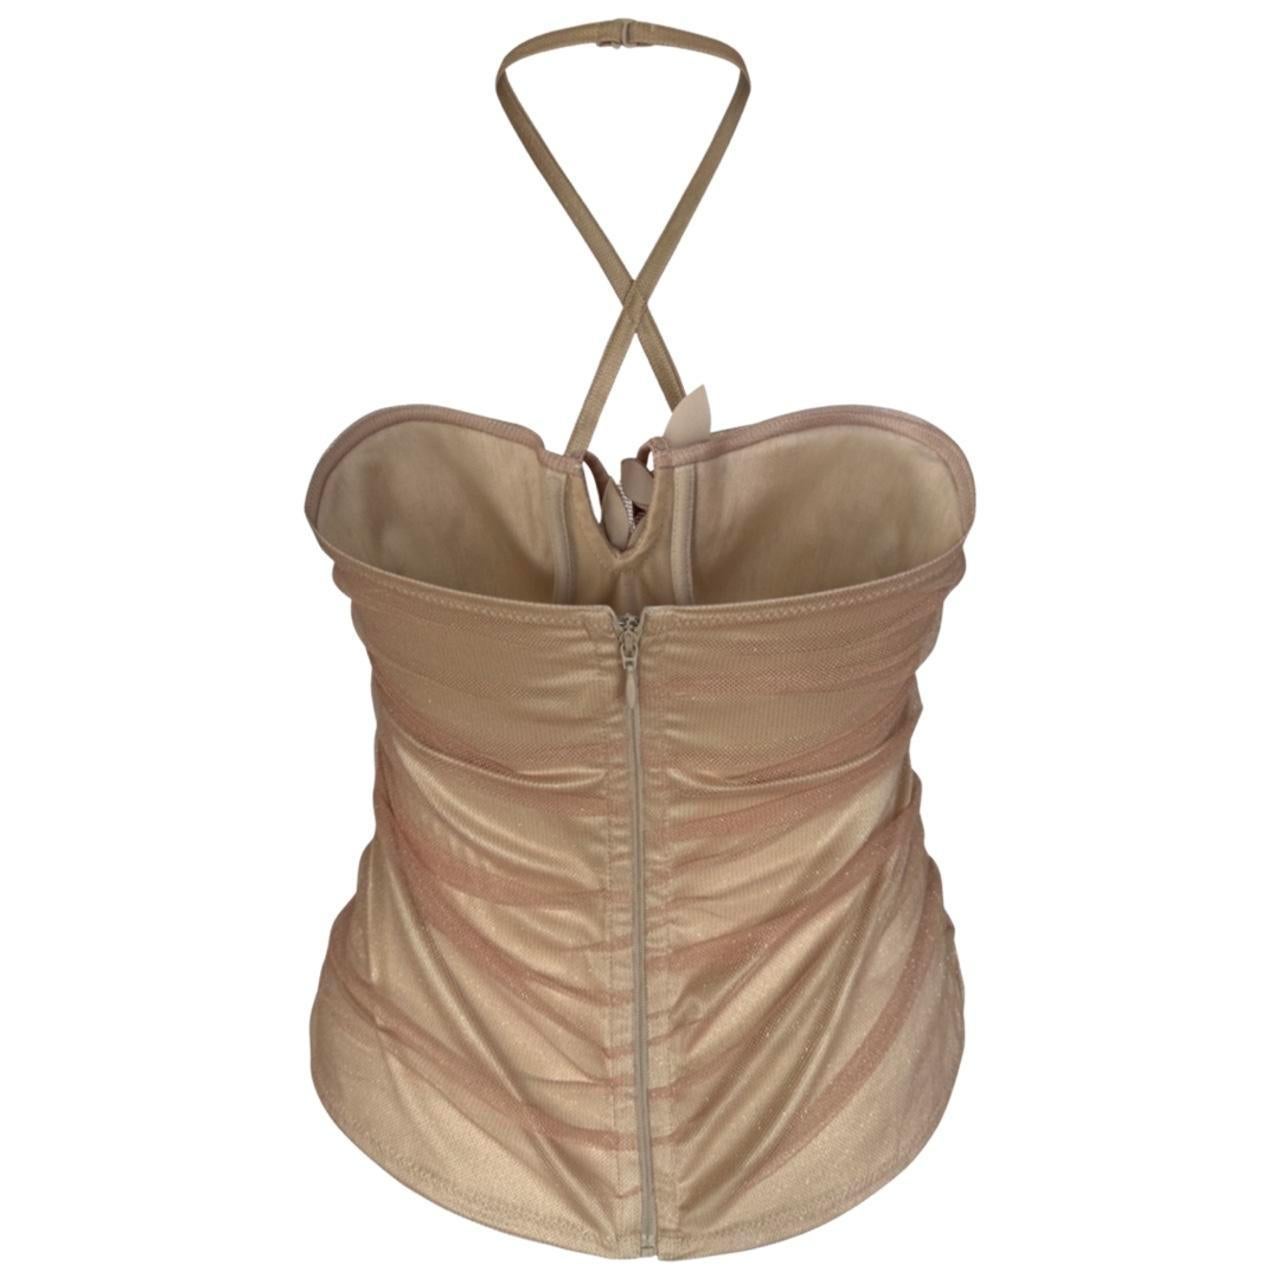 ✨ Vintage La Perla halter neck corset with flowers details
✨Pristine conditions
✨Size IT2 , fits XS or size 6 UK